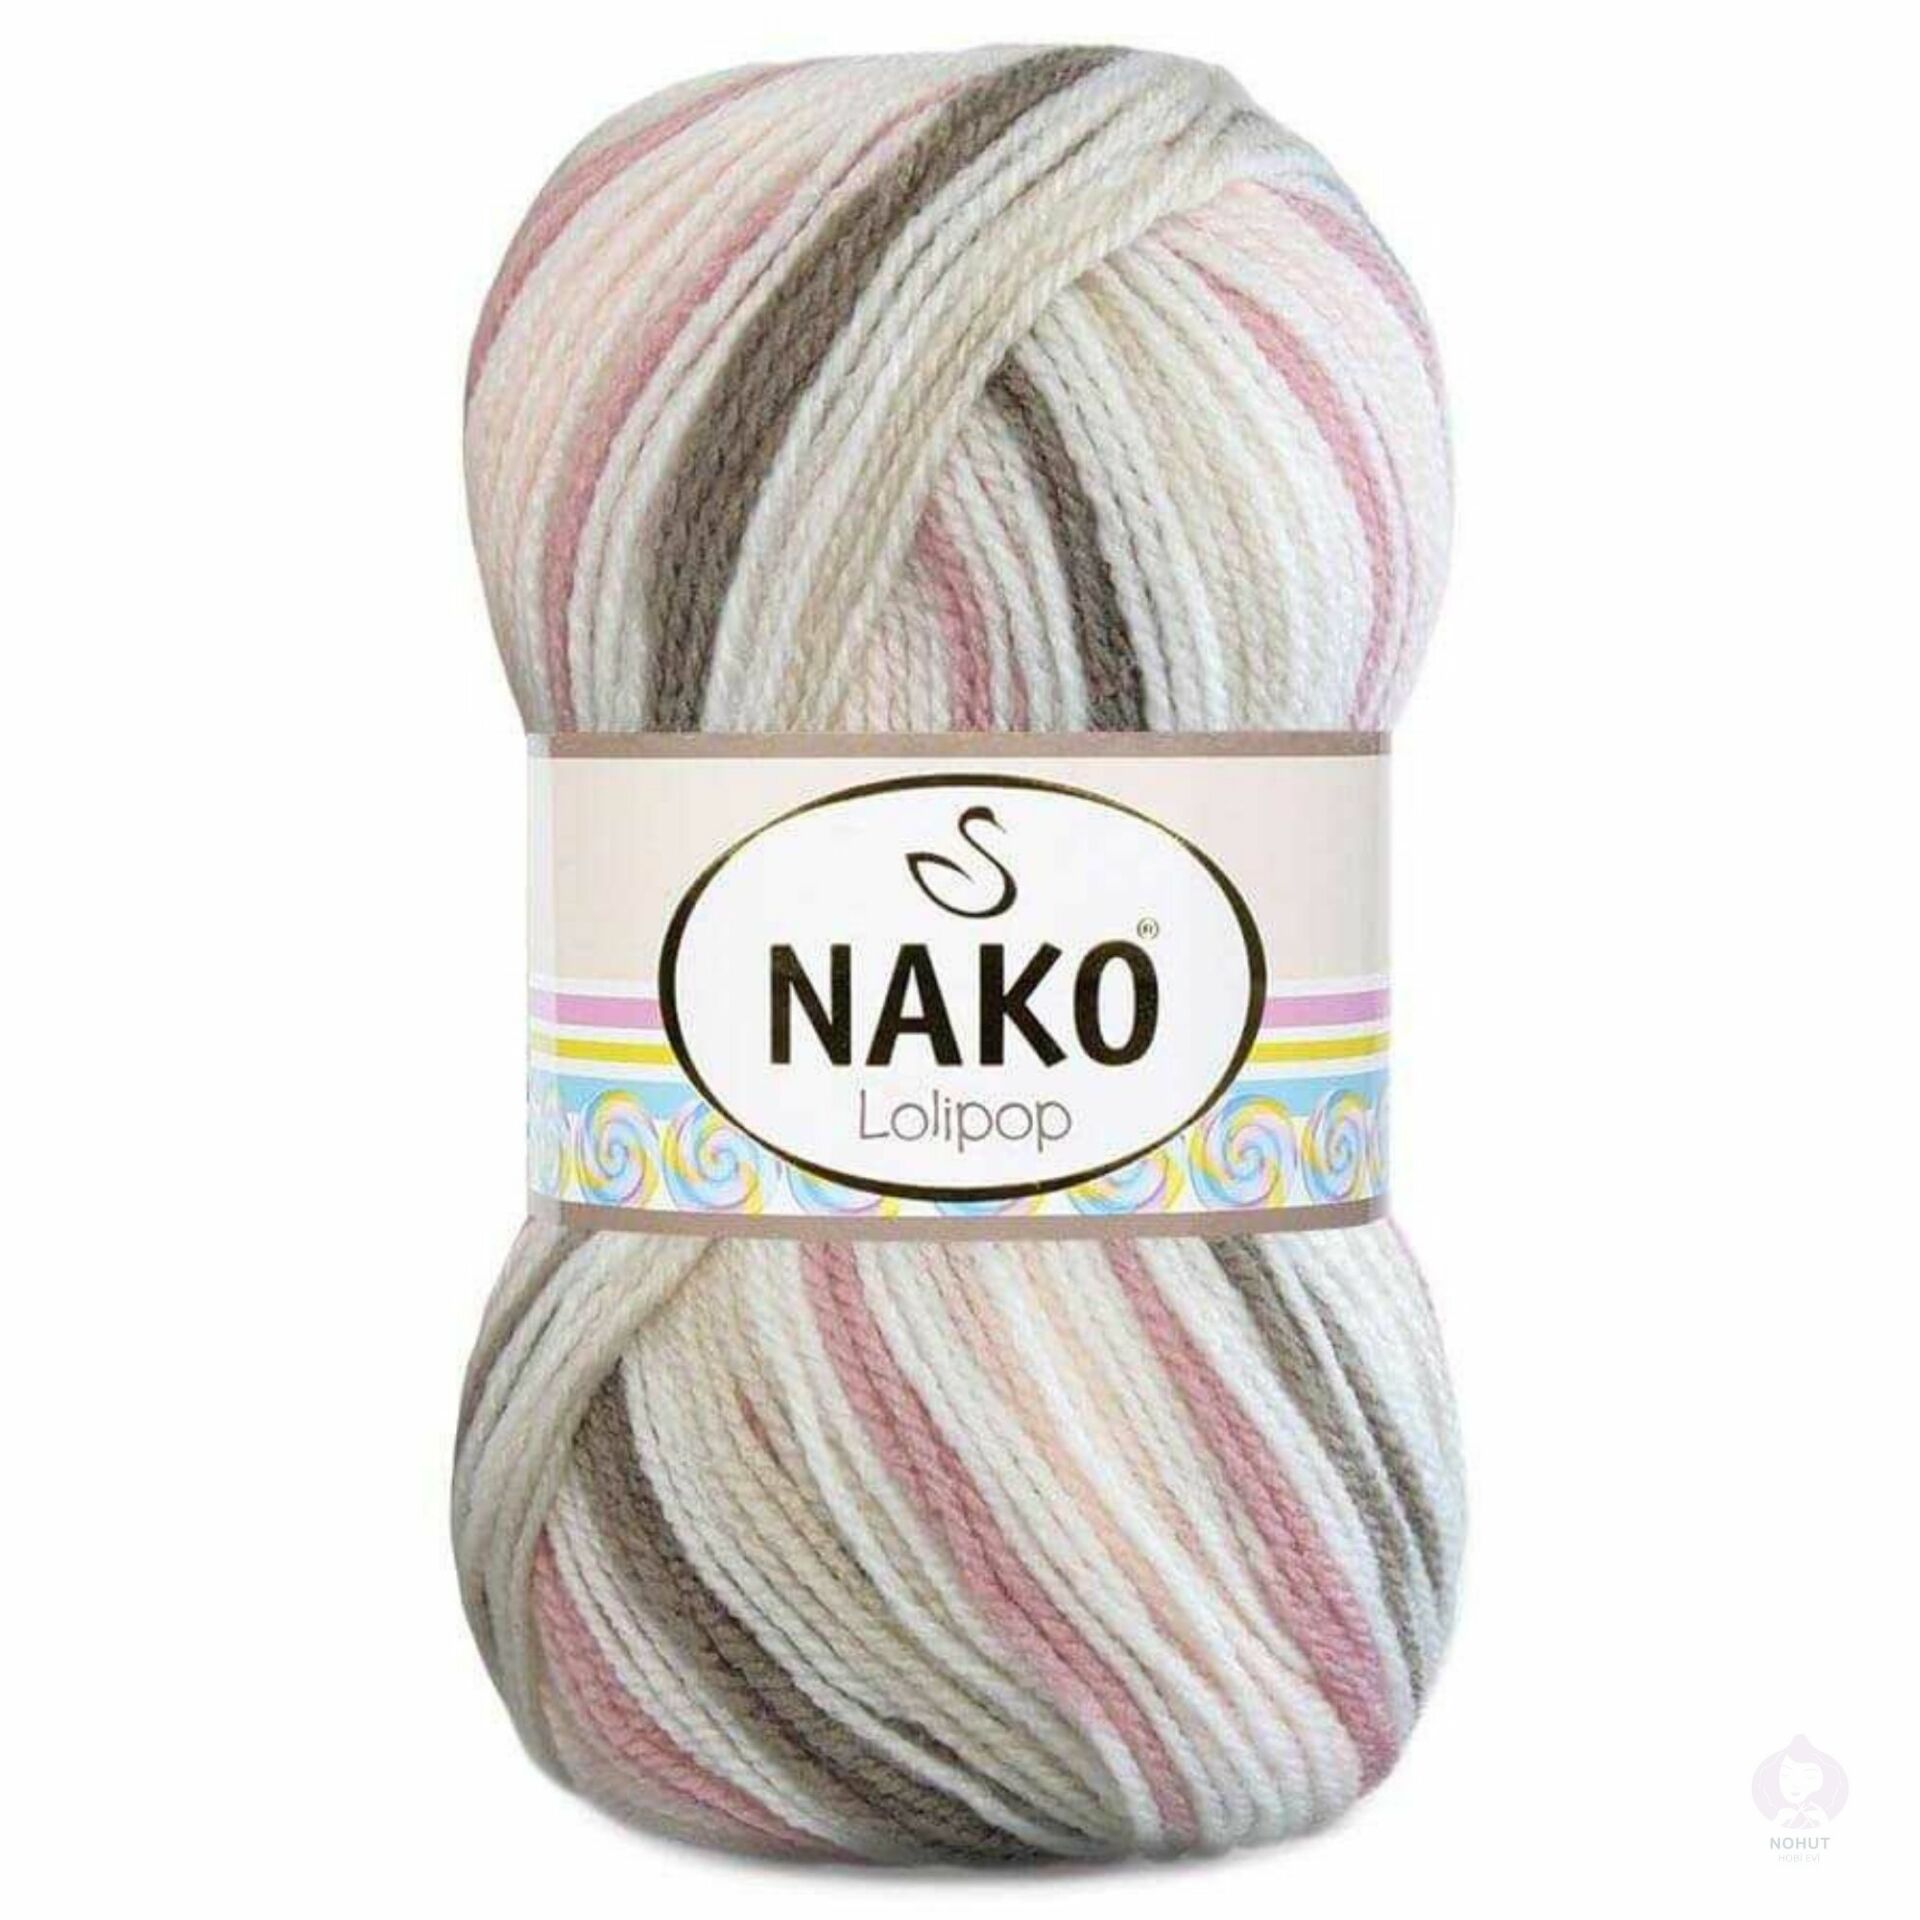 Nako Lolipop 80564